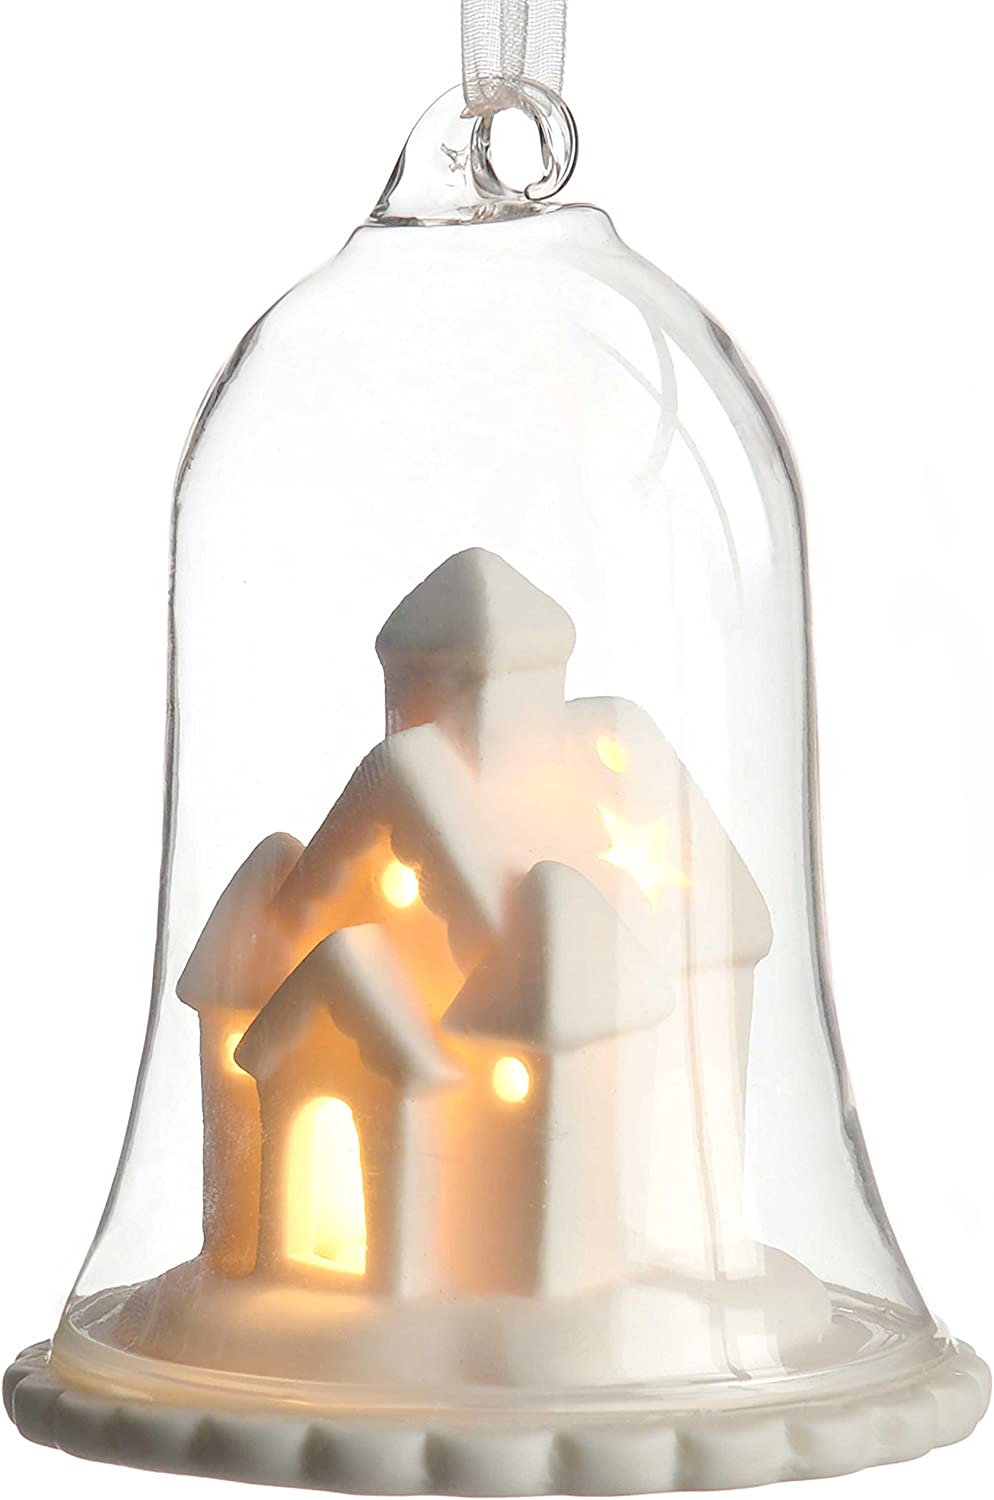 WeRChristmas 10 cm Glass White Village Candle Lantern Christmas Decoration